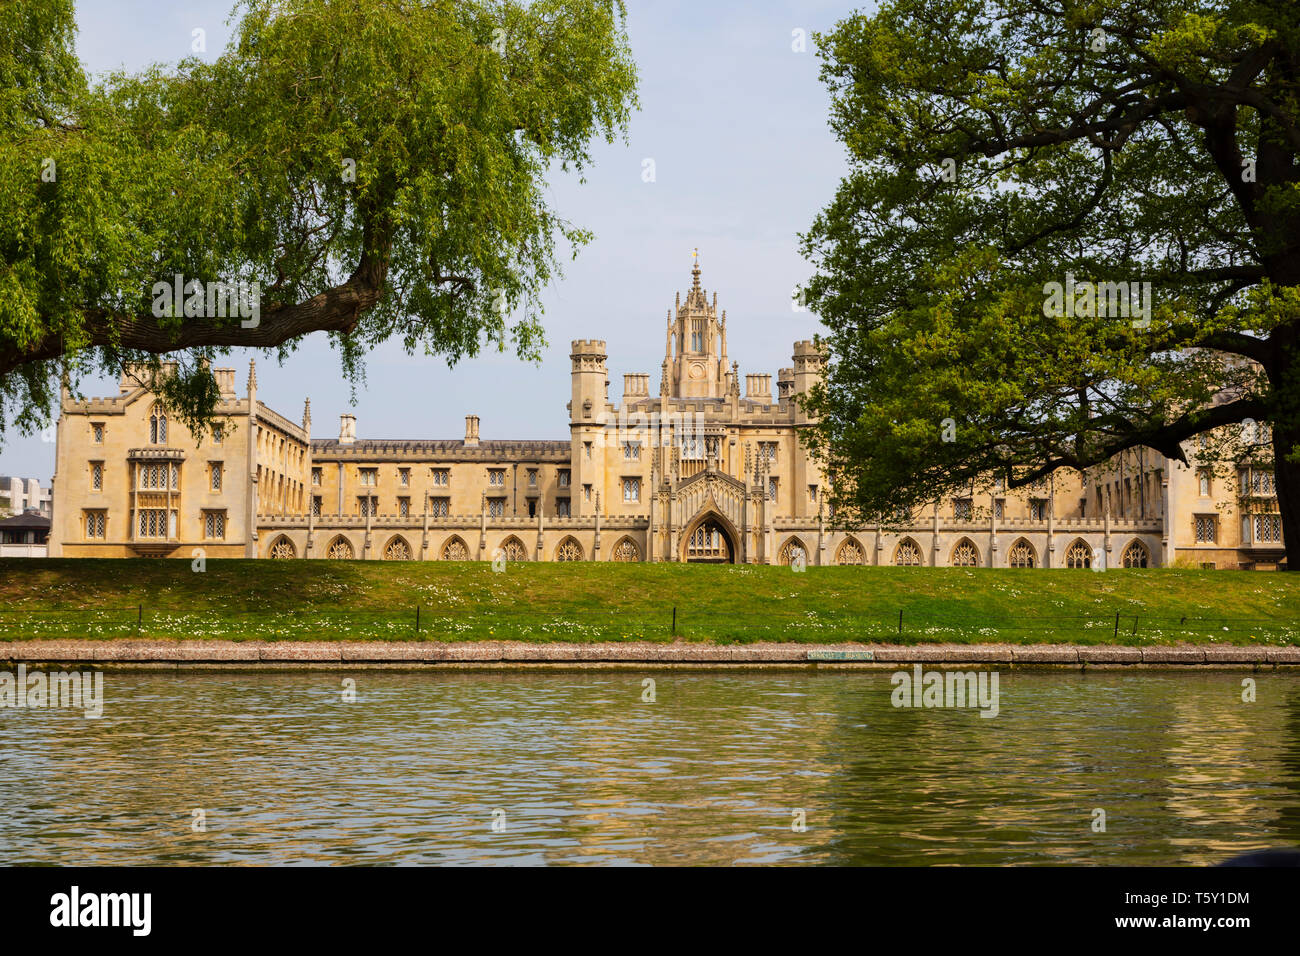 St. Johns College vom Fluss Cam gesehen, Universitätsstadt Cambridge, Cambridgeshire, England Stockfoto